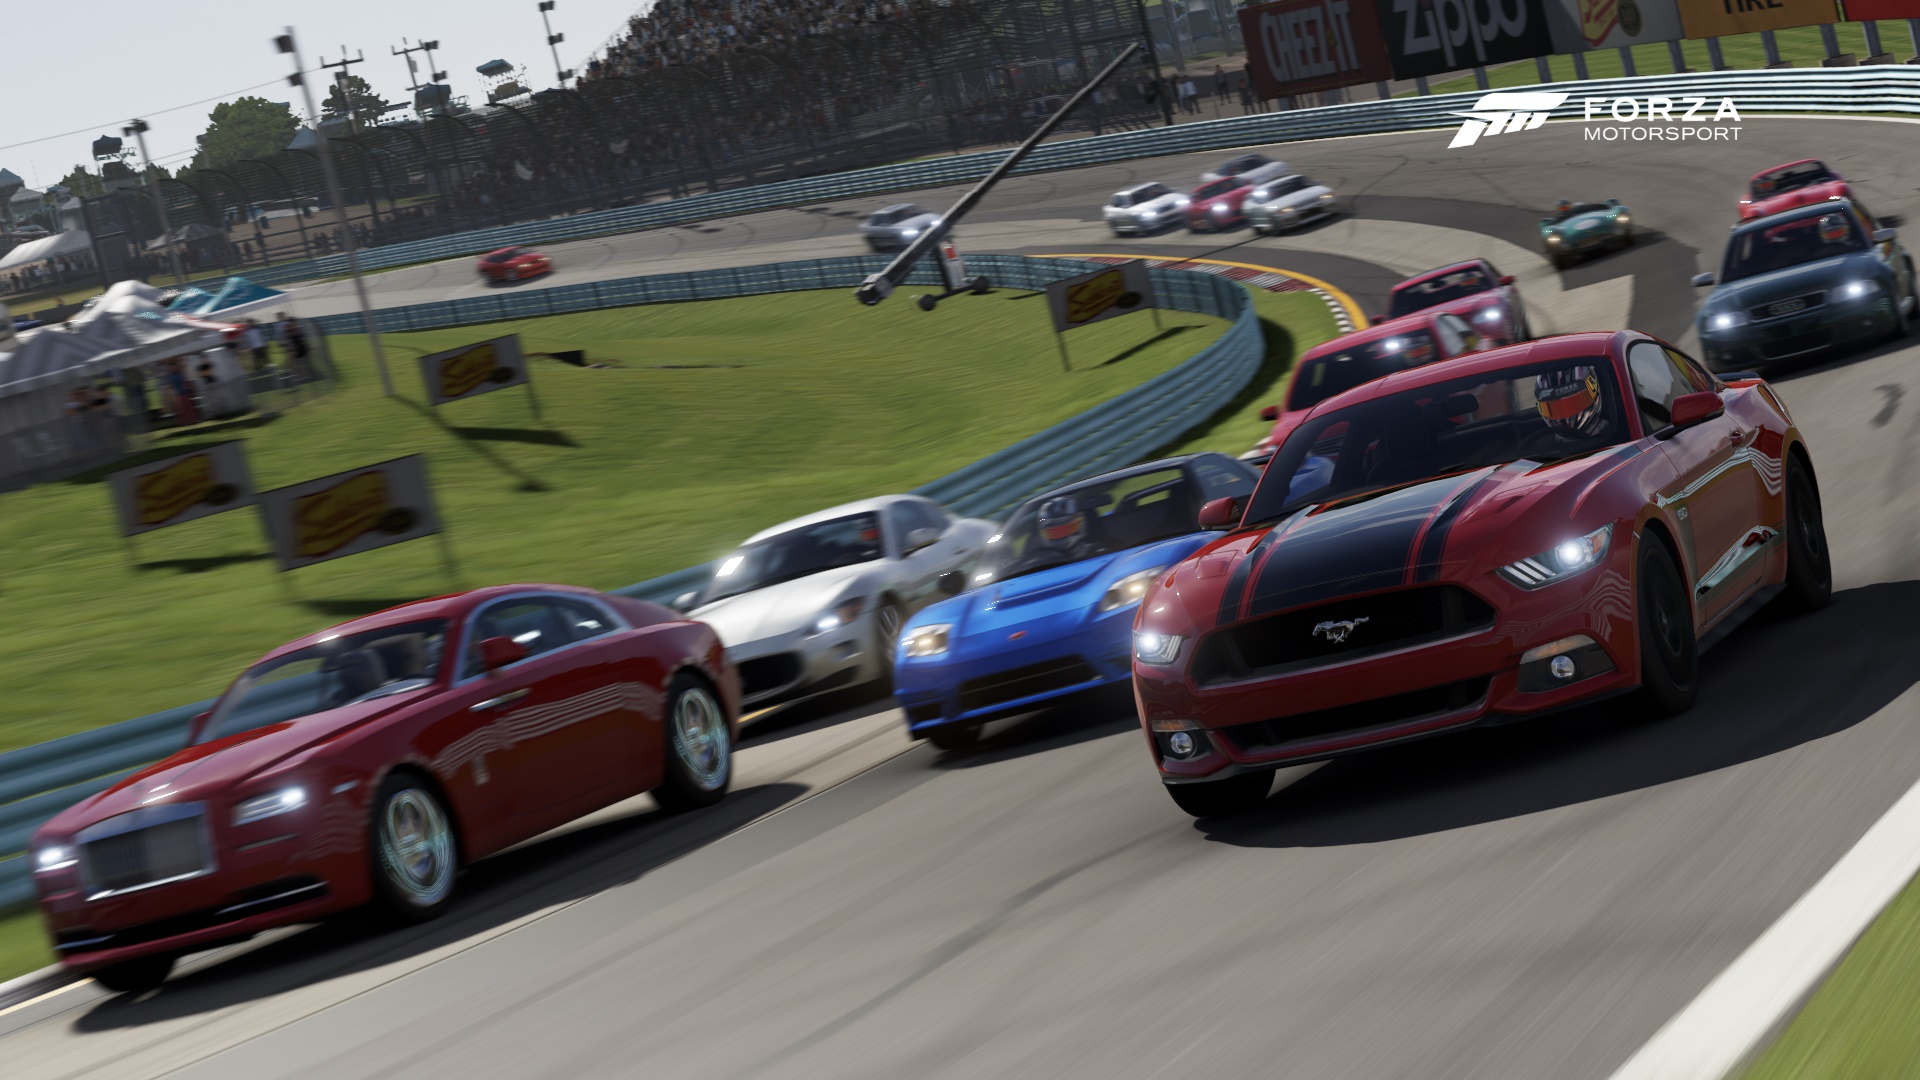 Forza Motorsport 6 HD wallpapers, Desktop wallpaper - most viewed